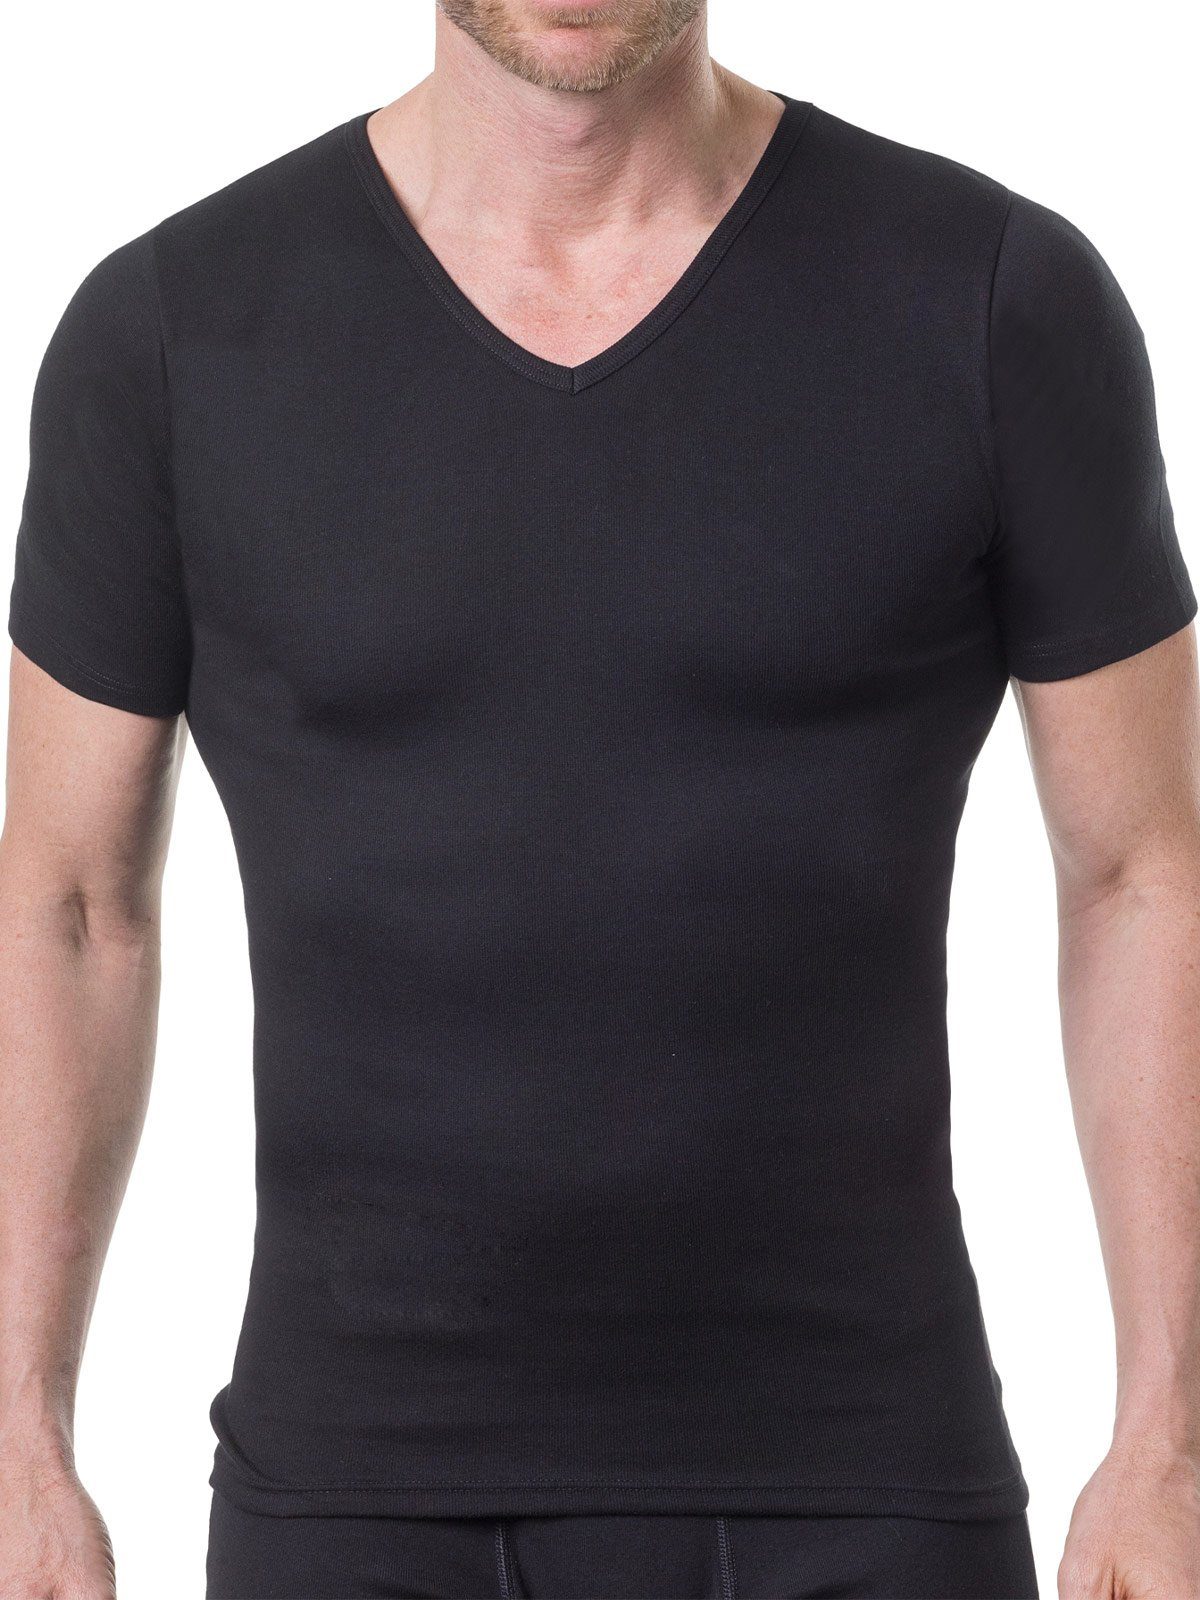 KUMPF Unterziehshirt 4er Sparpack Herren (Spar-Set, schwarz Bio Markenqualität 4-St) Cotton T-Shirt hohe